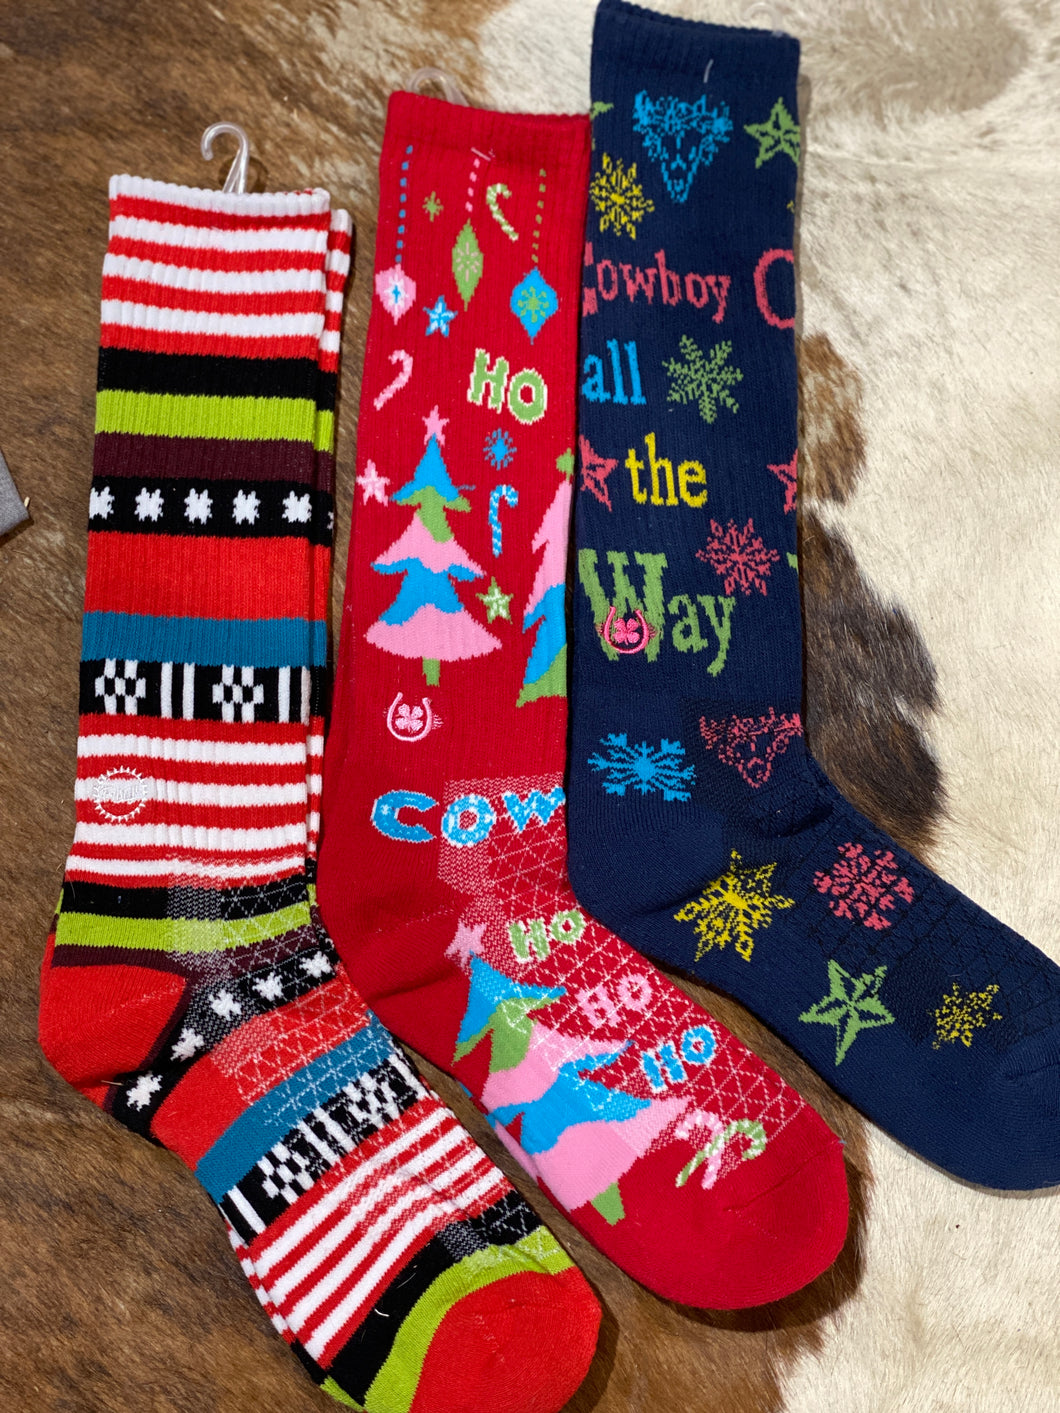 Lucky Christmas socks